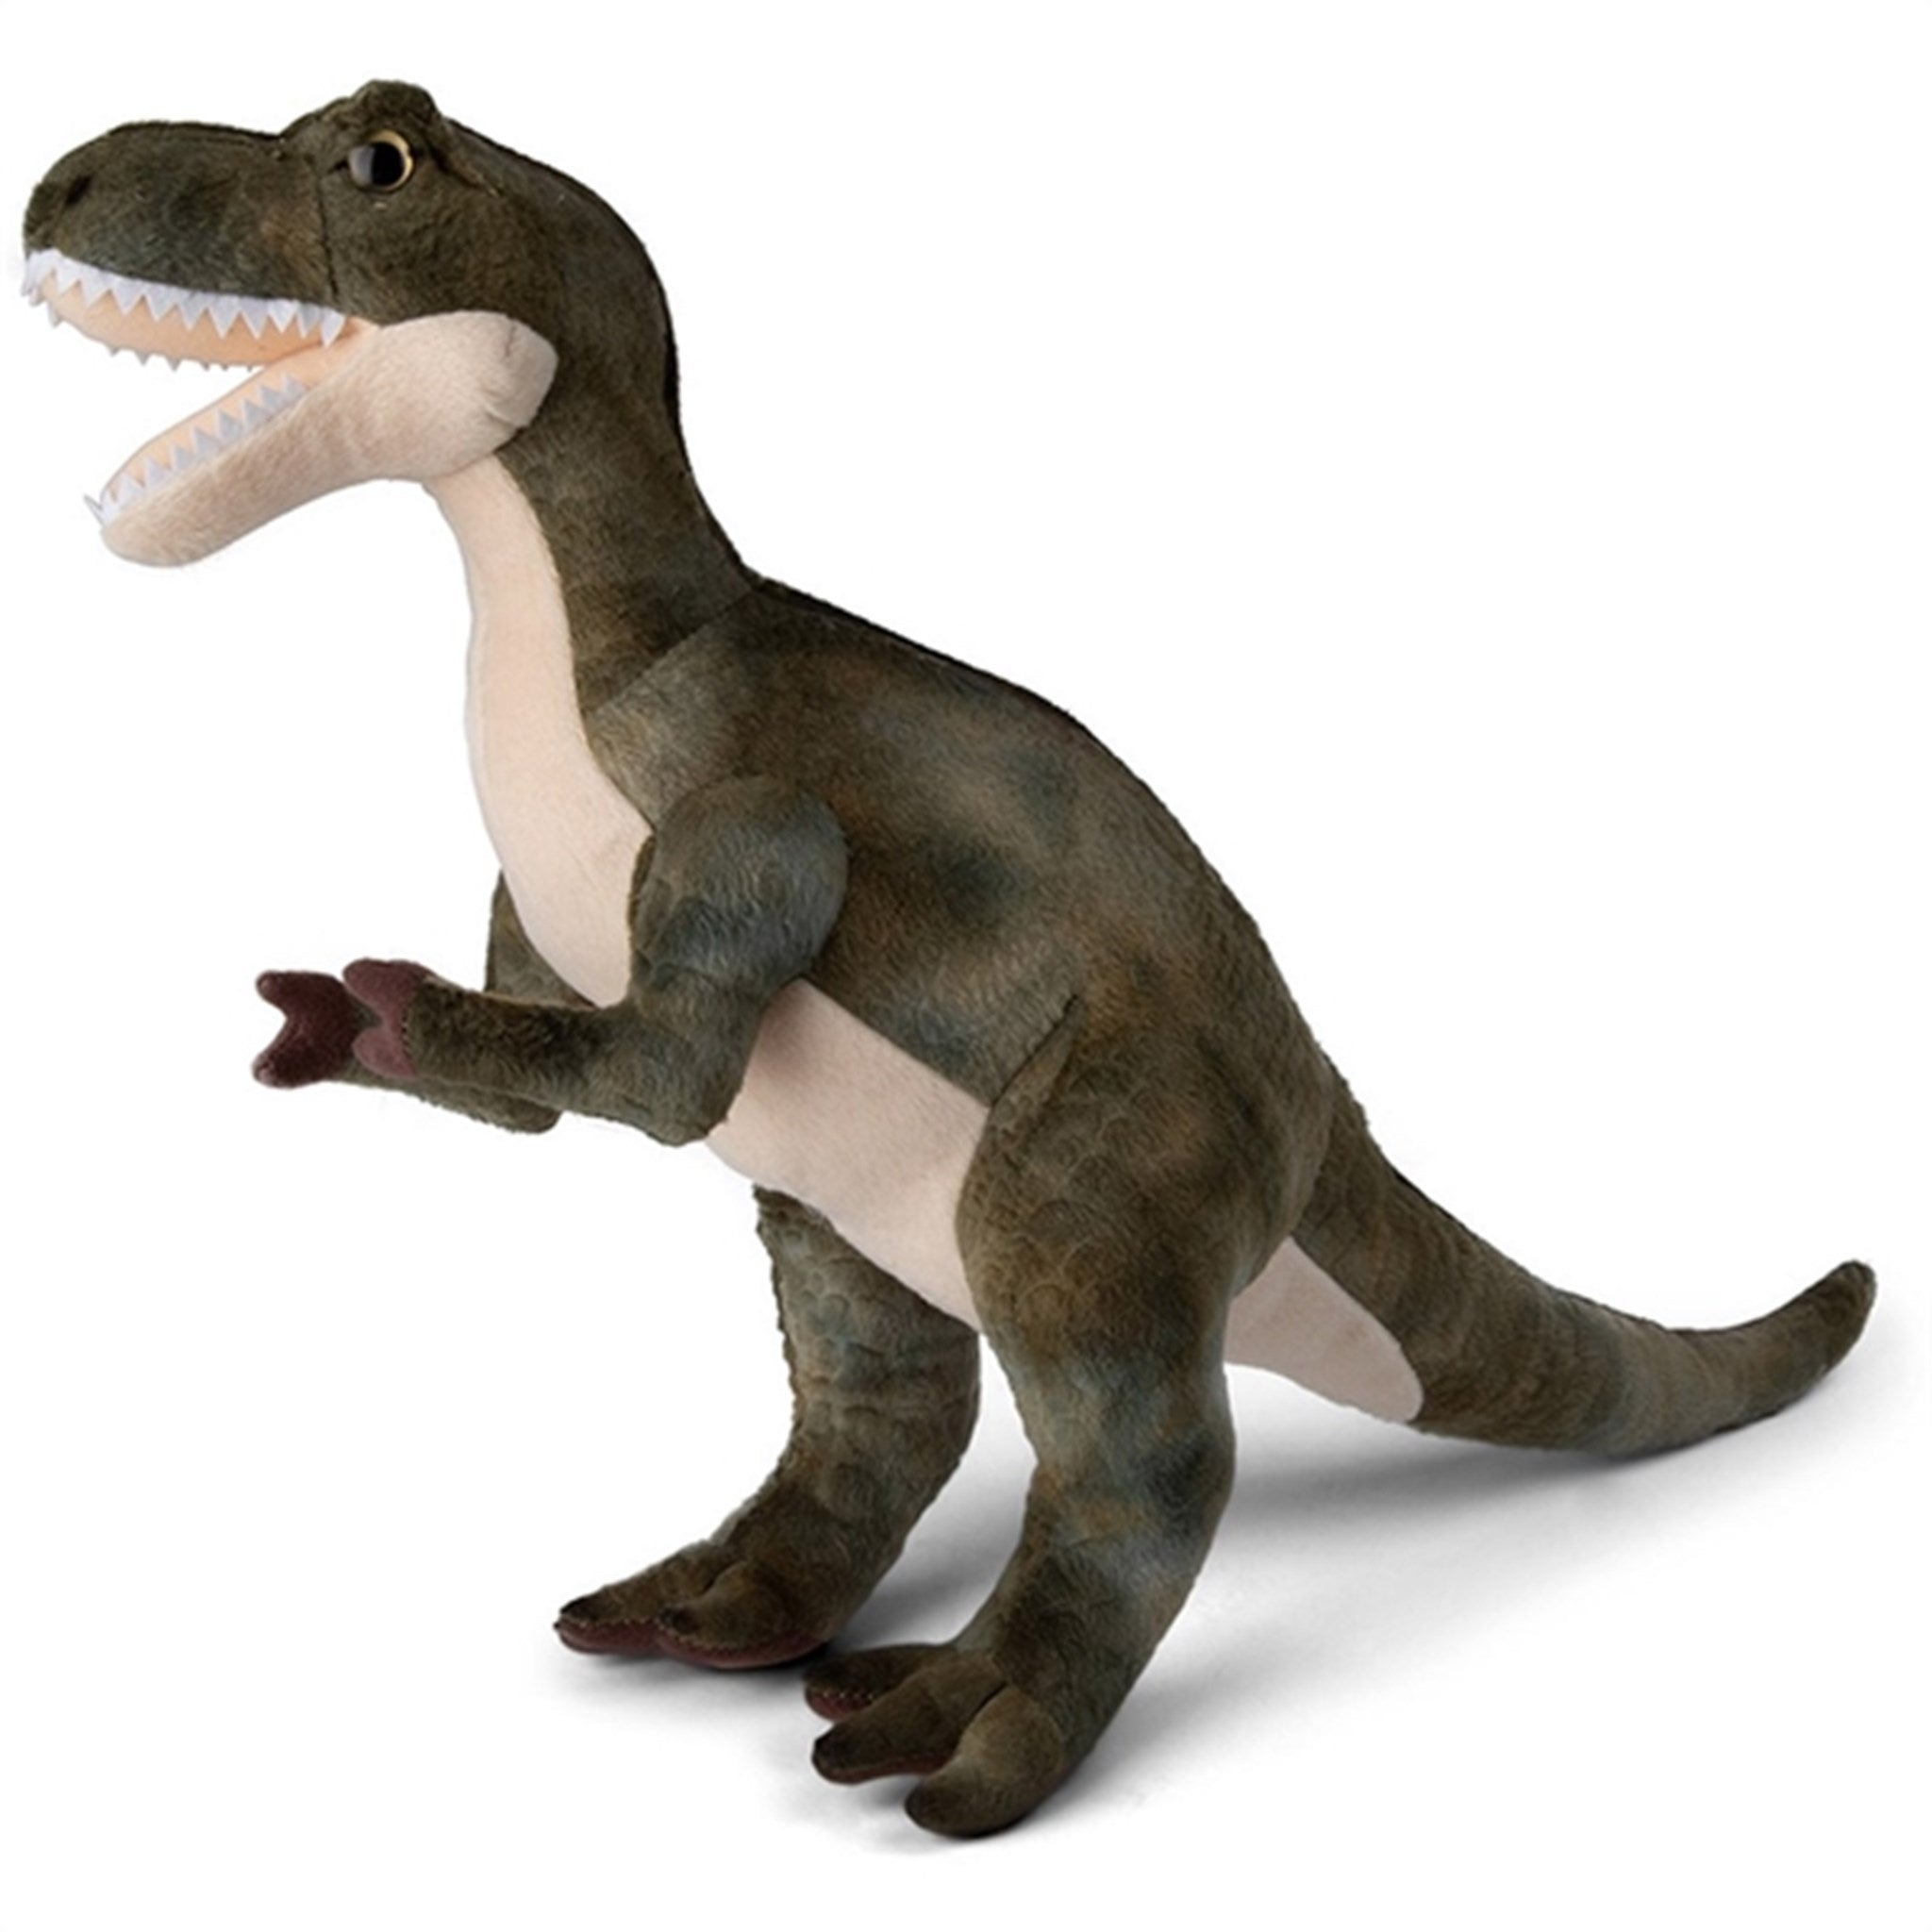 Bon Ton Toys WWF Plush T-Rex Dinosaur Green 47 cm